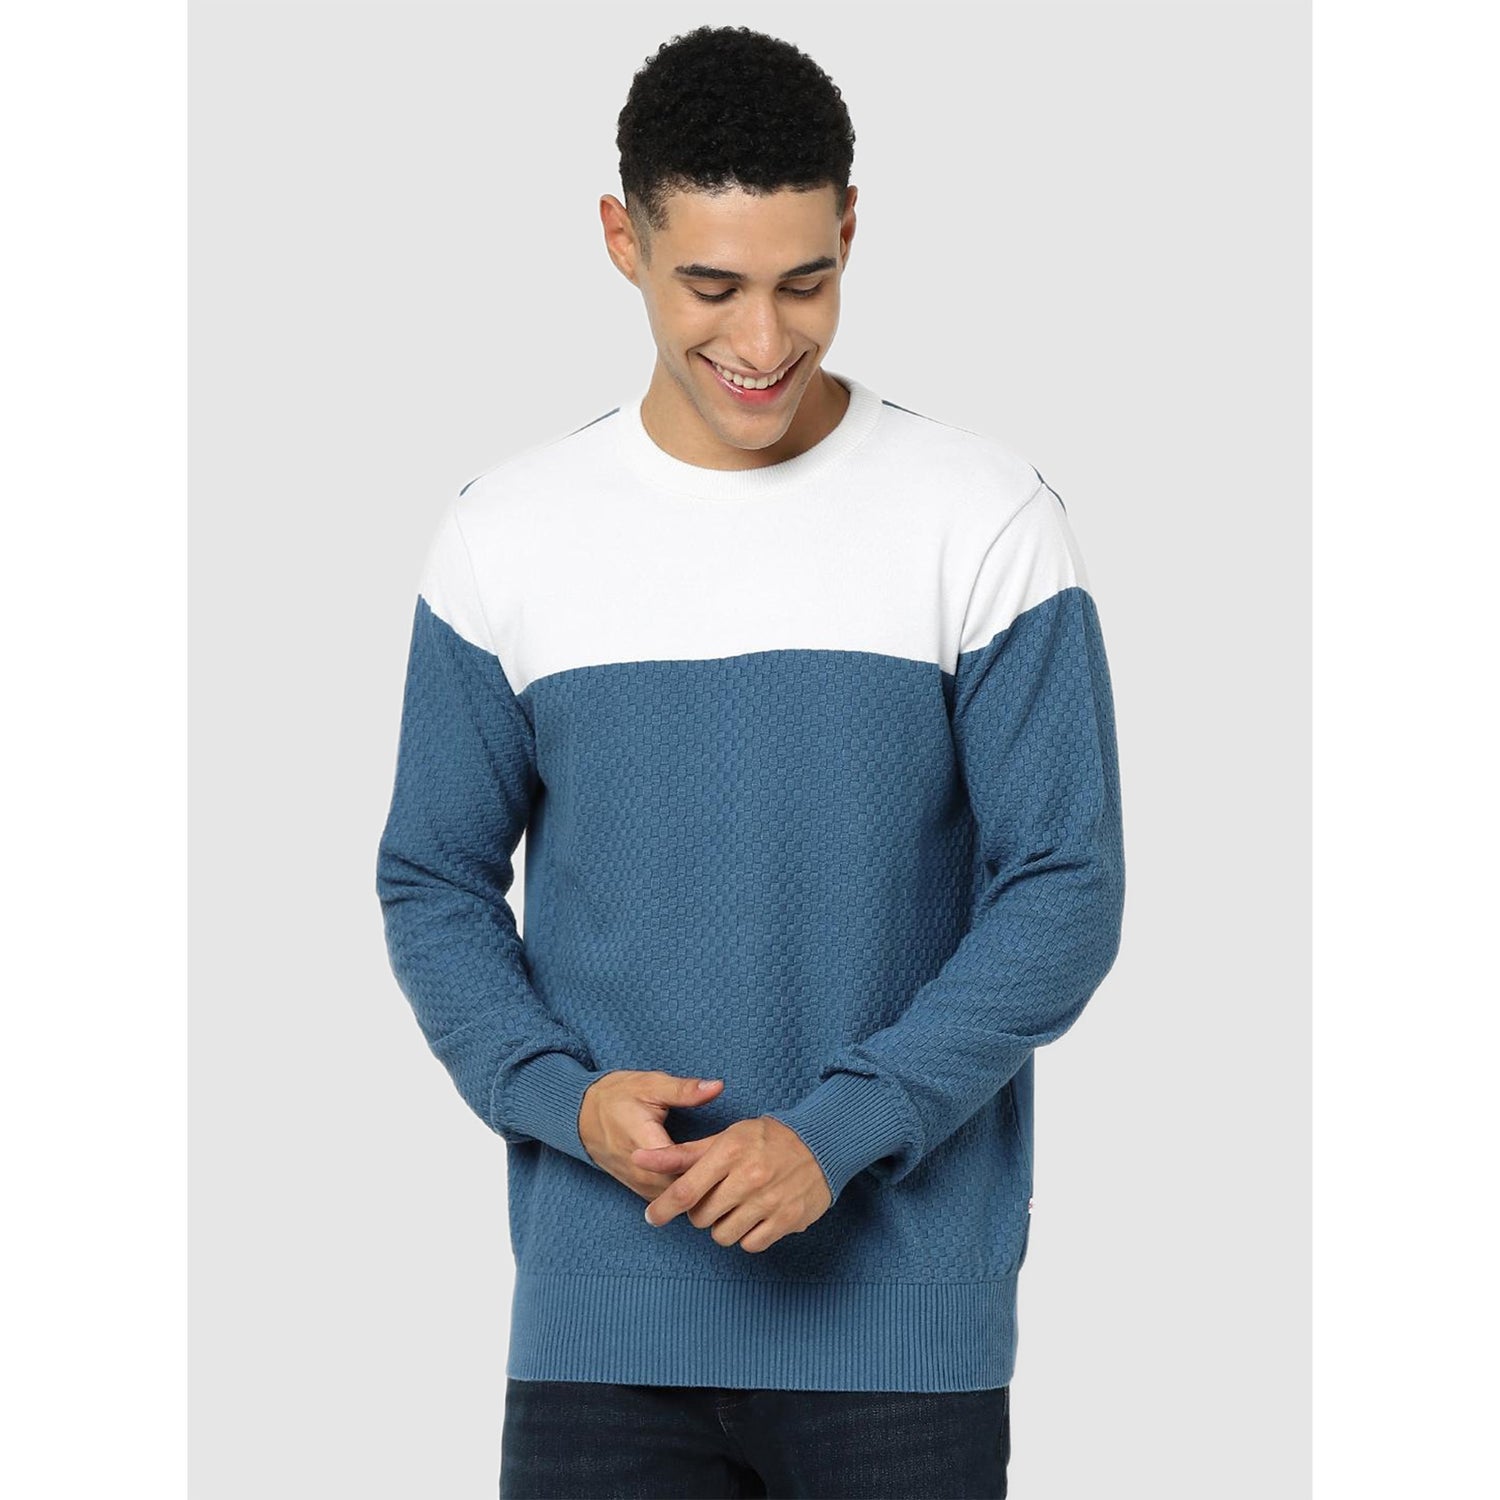 Blue Color Regular Fit Block Sweater (Various Sizes)